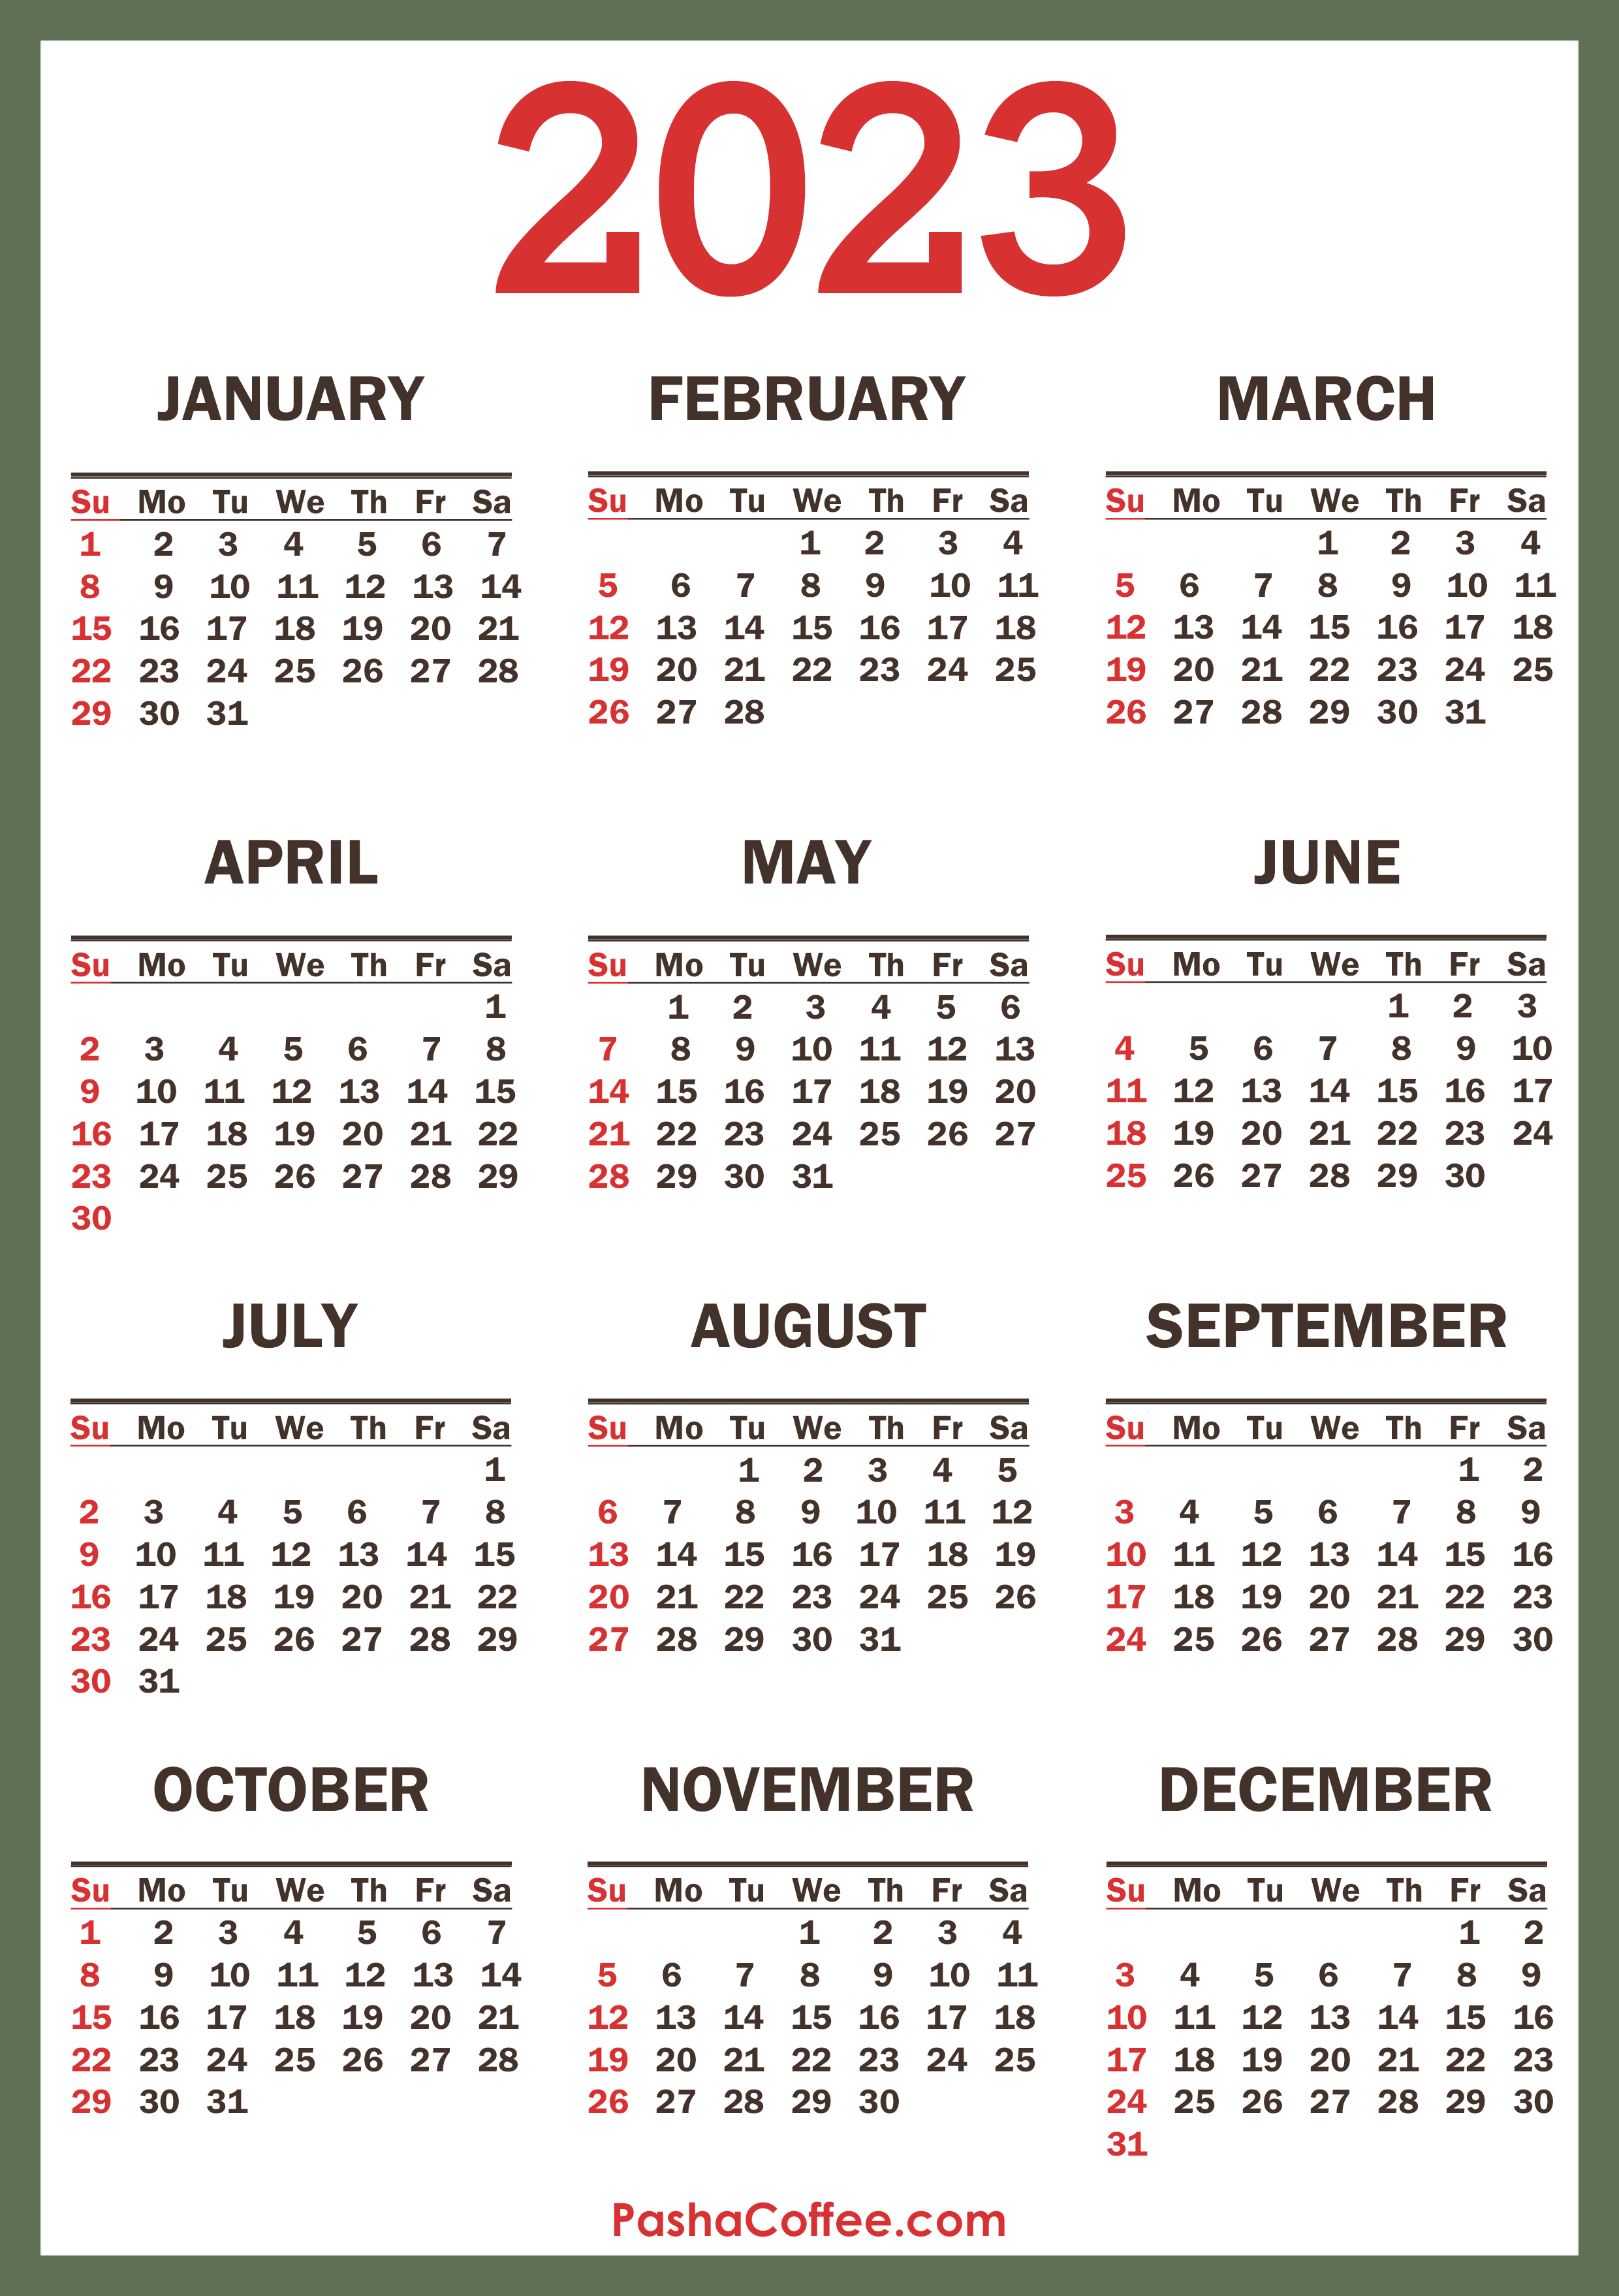 2023-ireland-bank-holidays-2023-calendar-vrogue